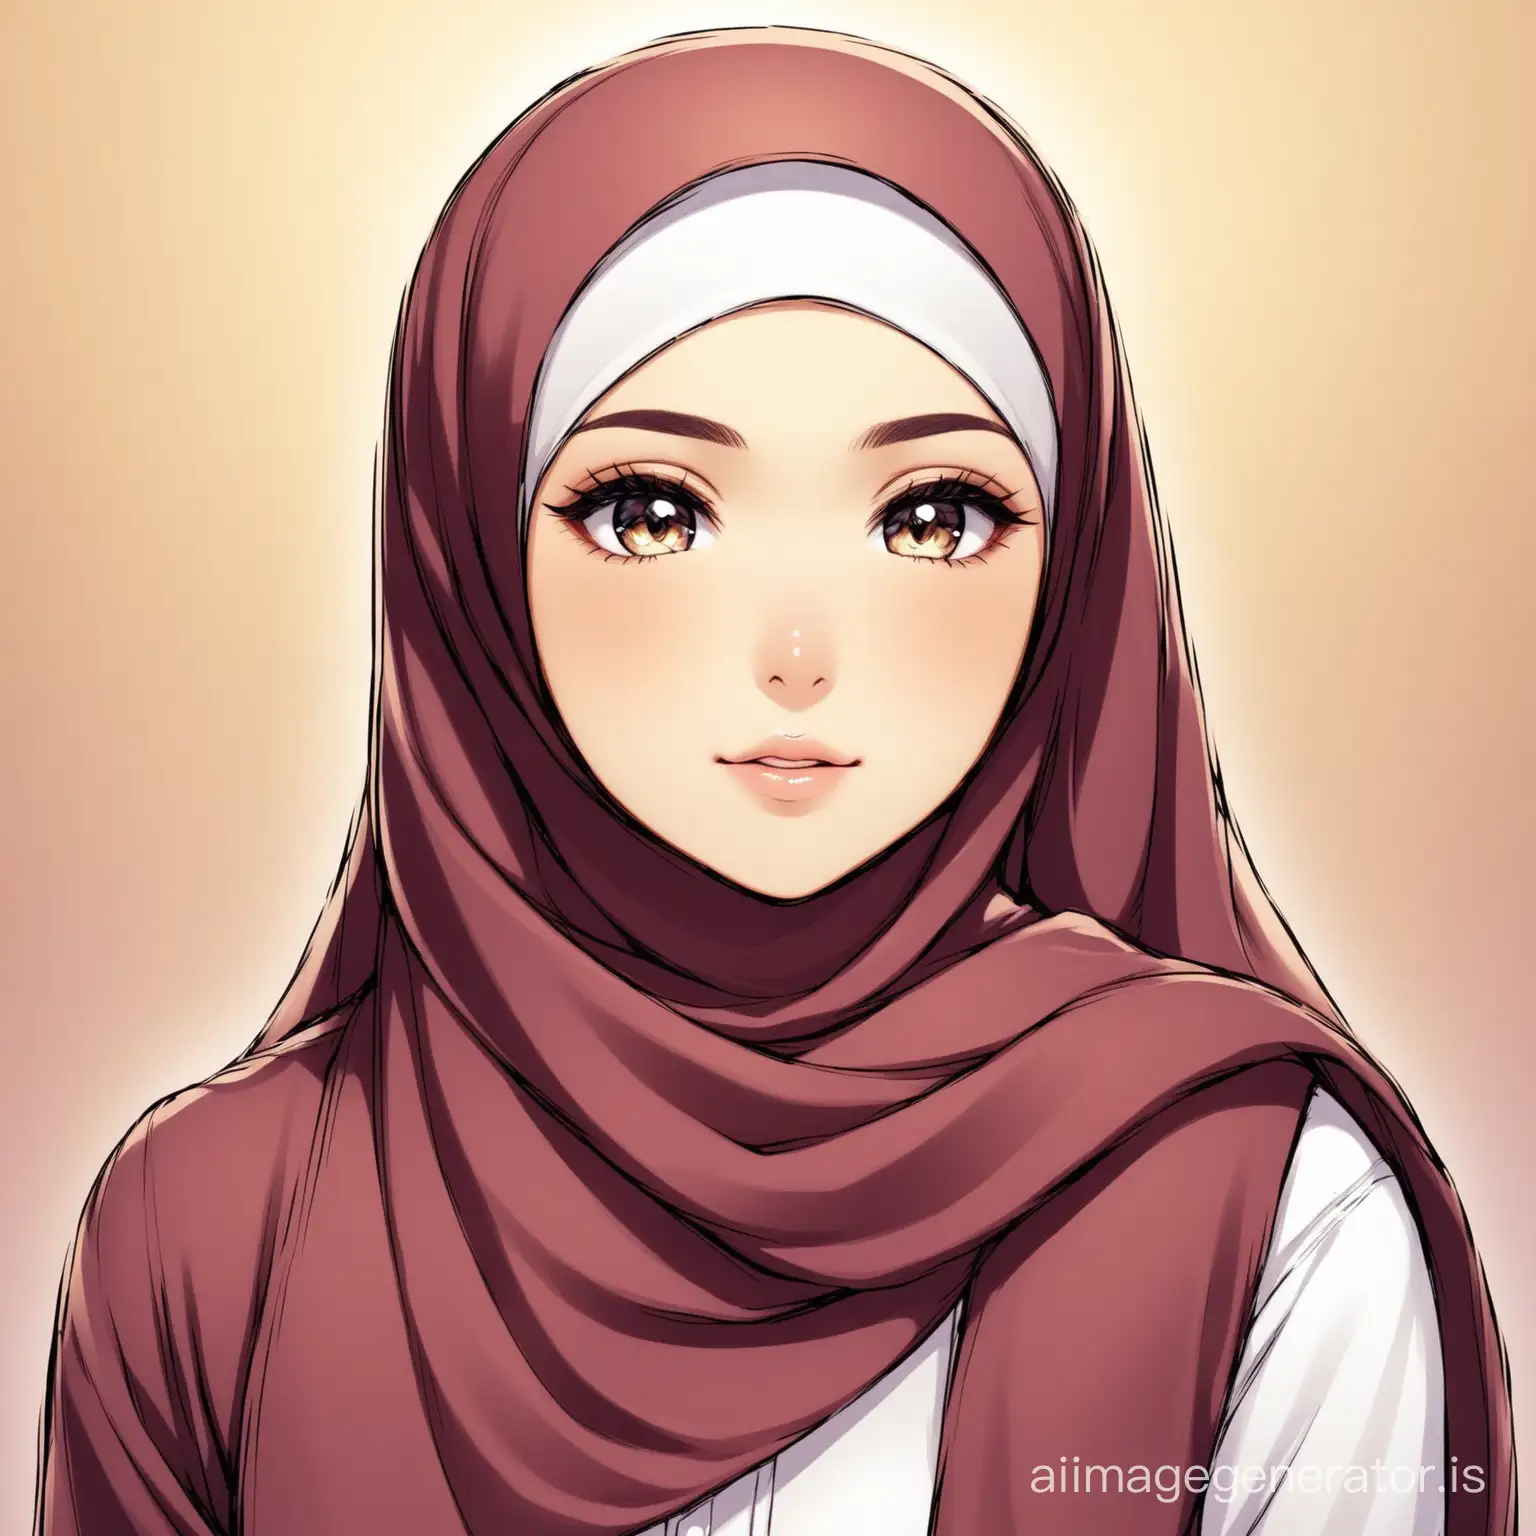 Female with hijab amira